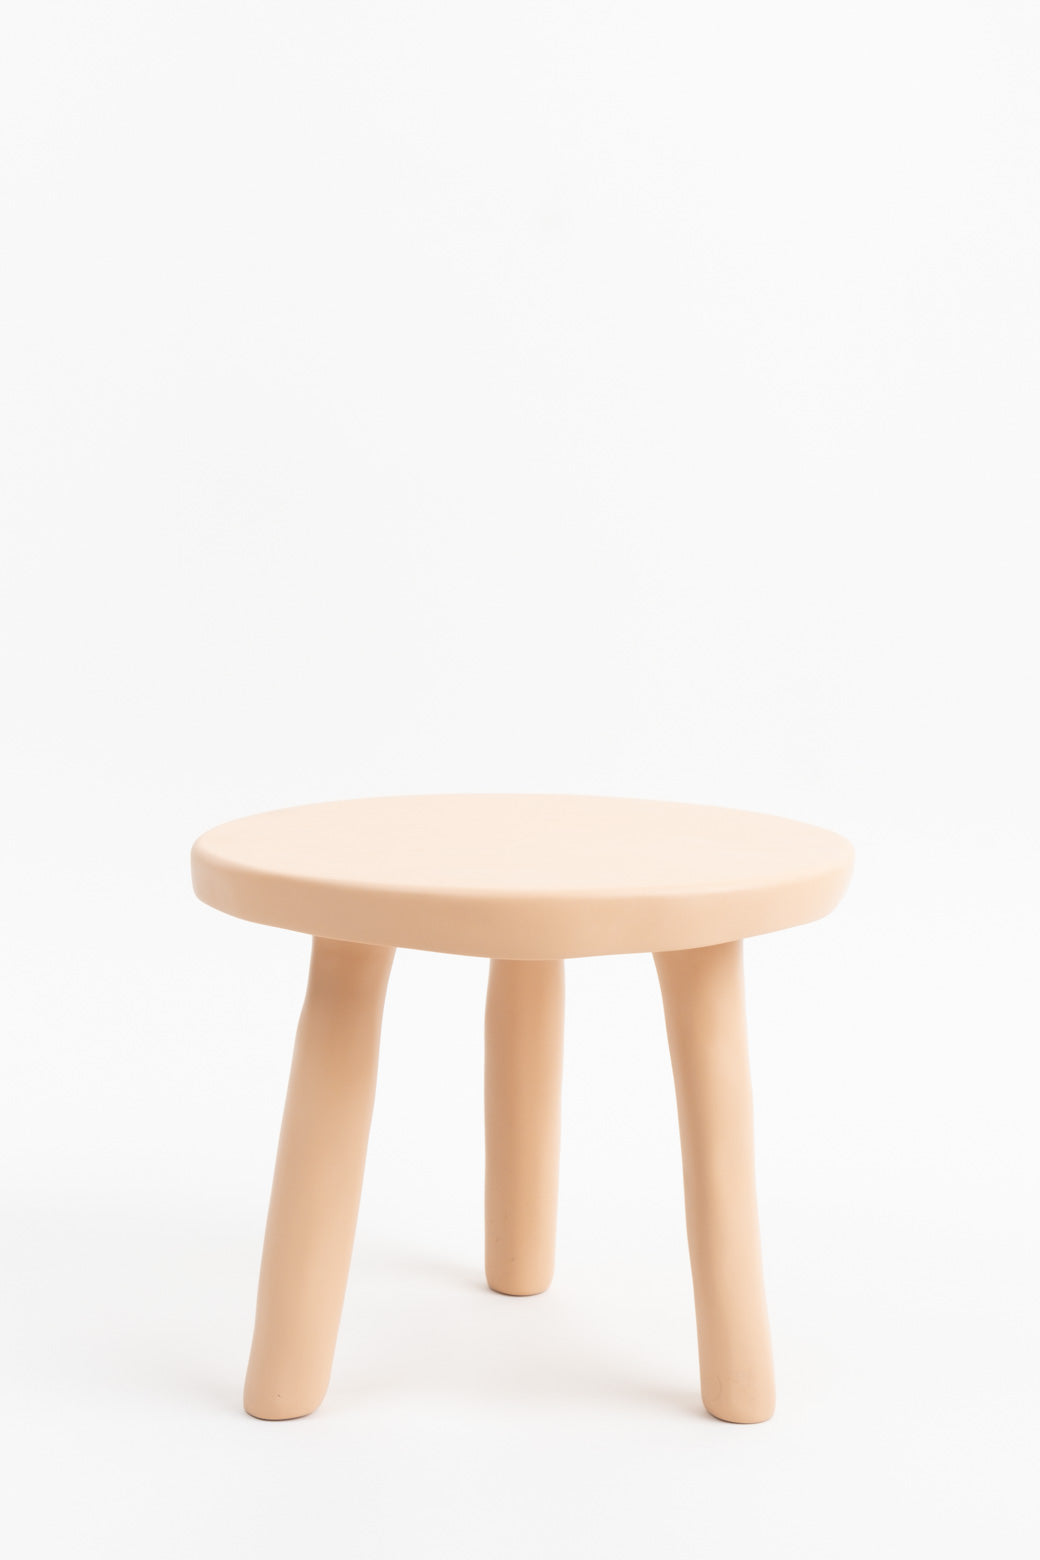 Tina Frey Designs milking stool